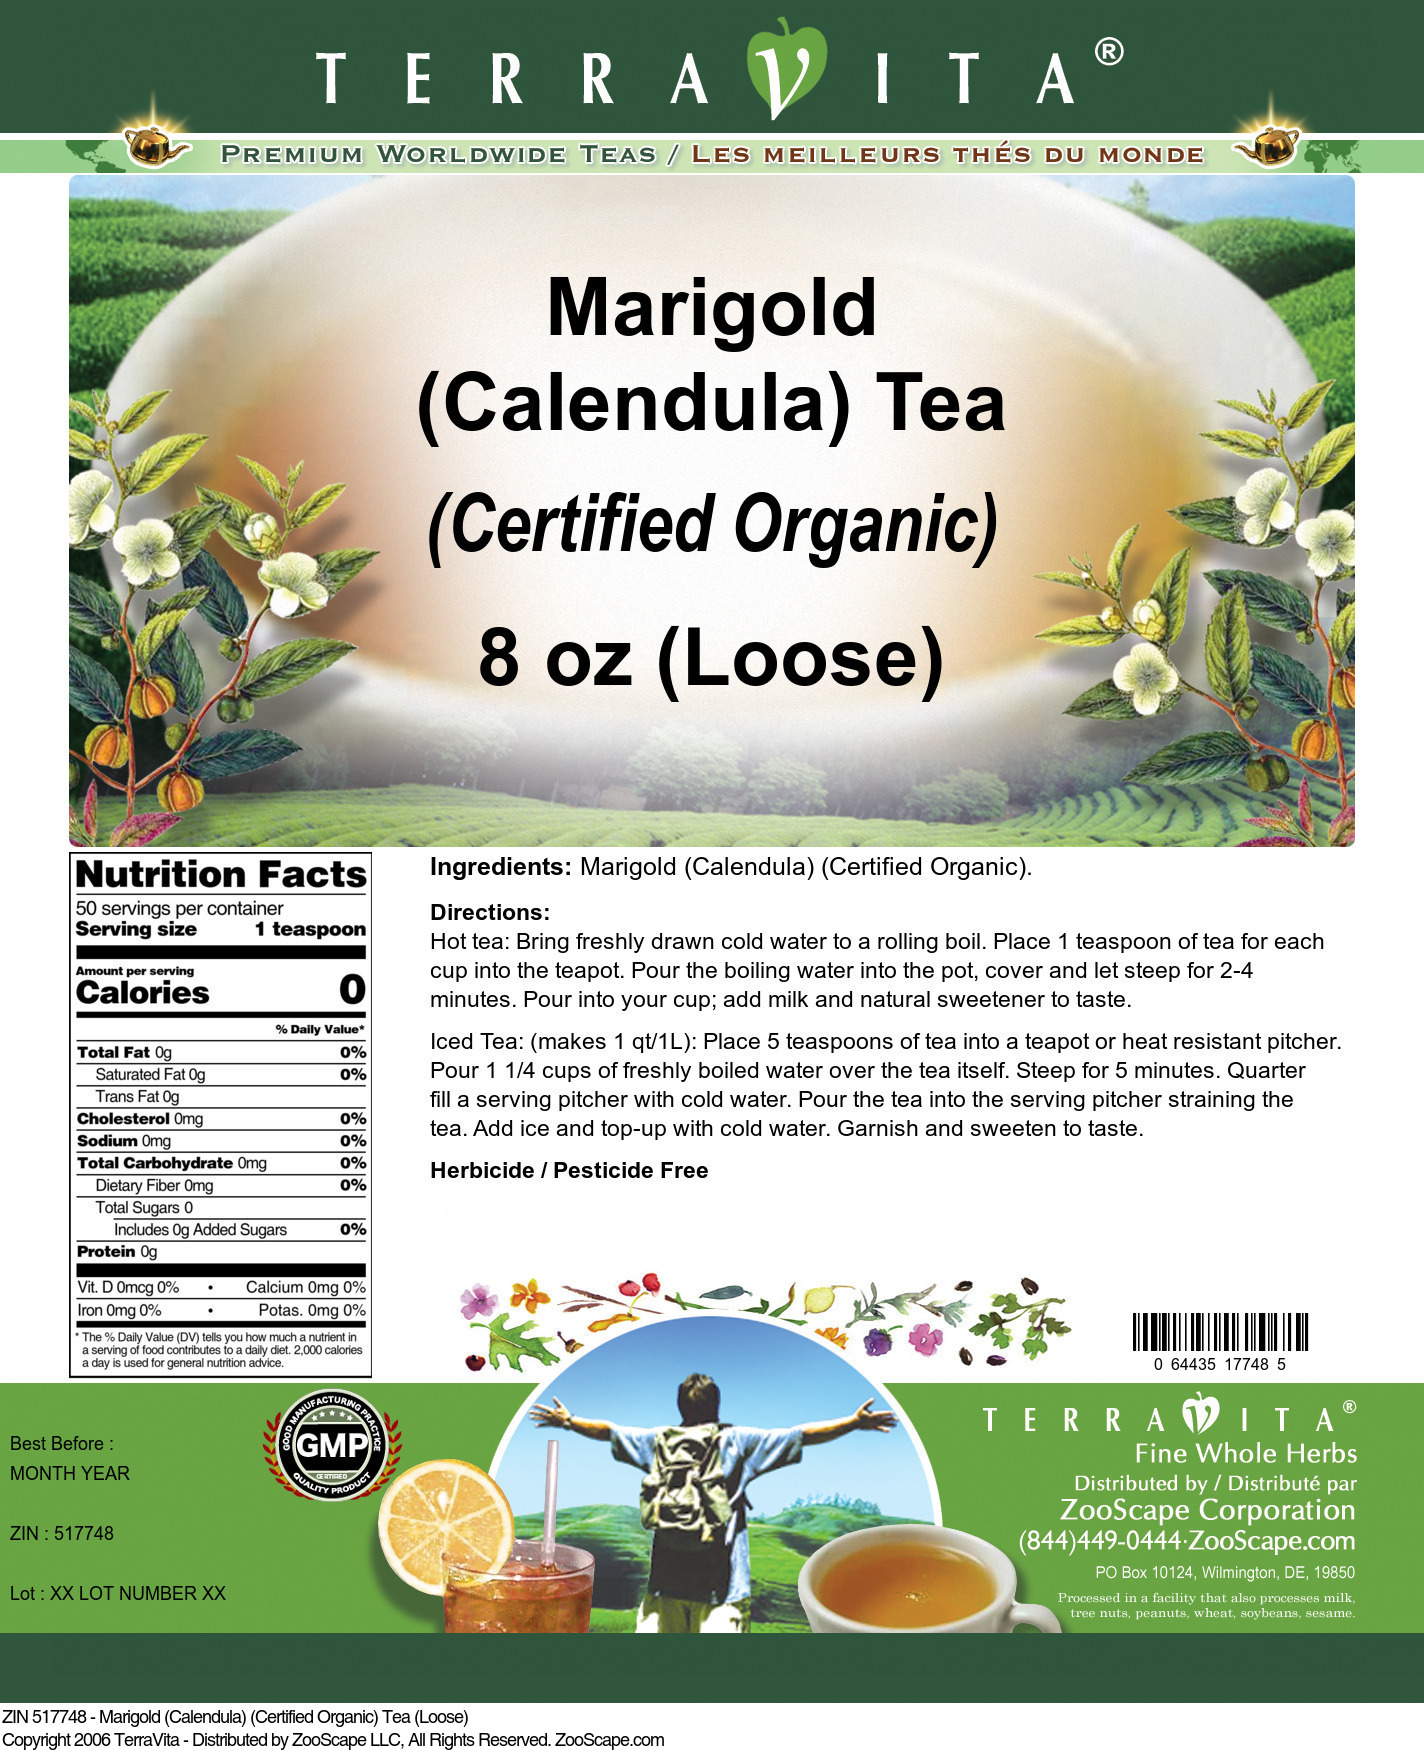 Marigold (Calendula) (Certified Organic) Tea (Loose) - Label